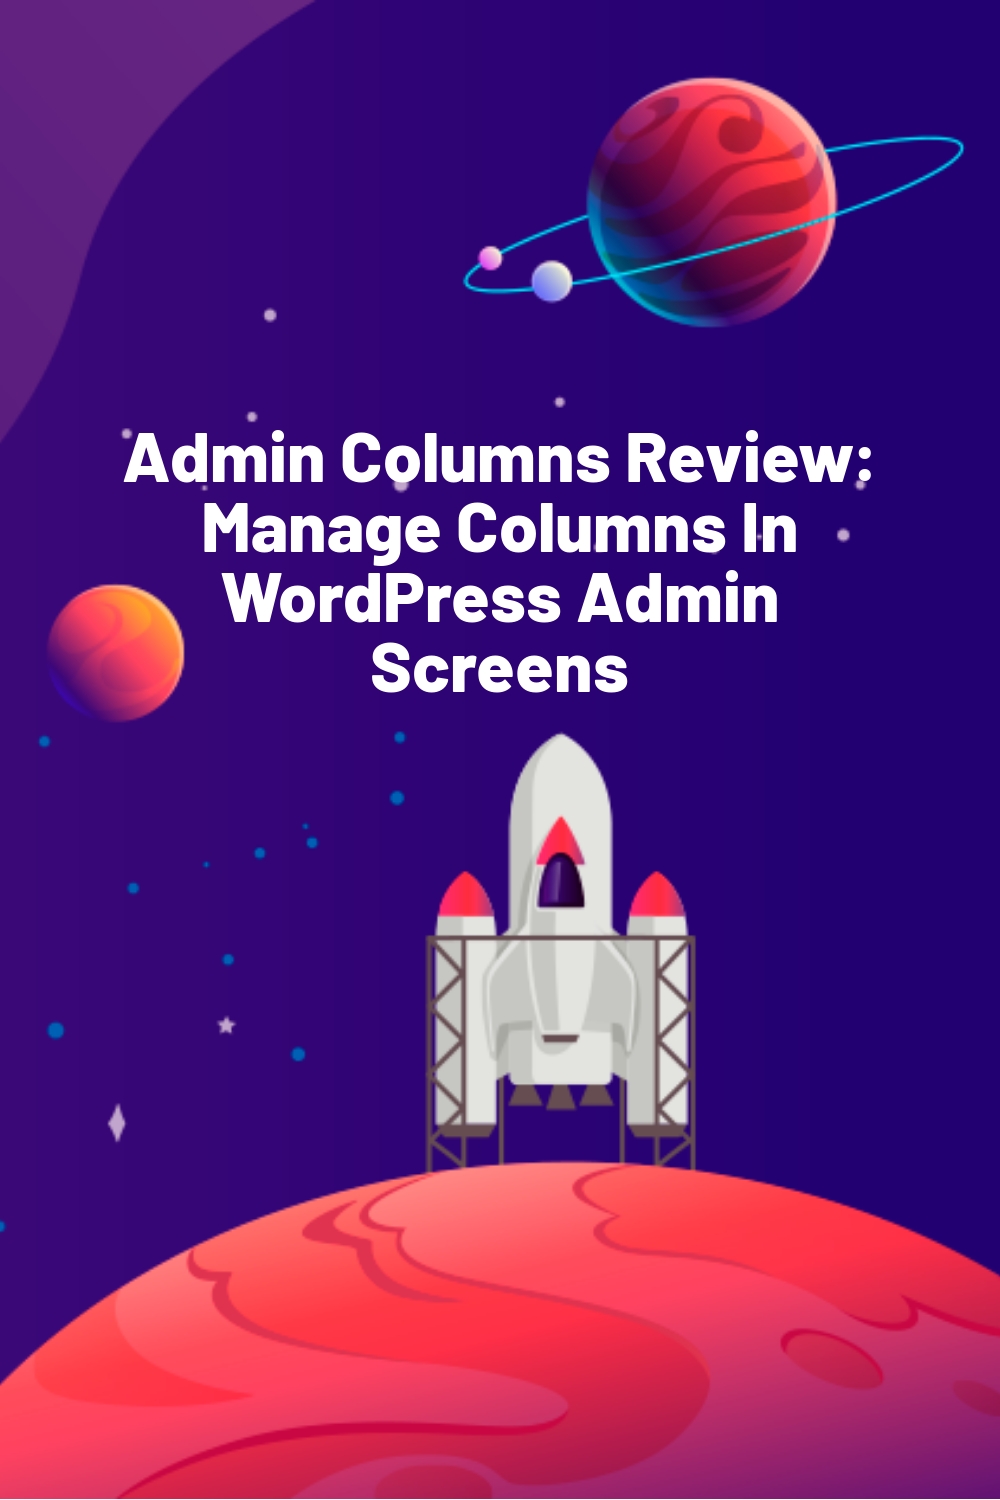 Admin Columns Review: Manage Columns In WordPress Admin Screens